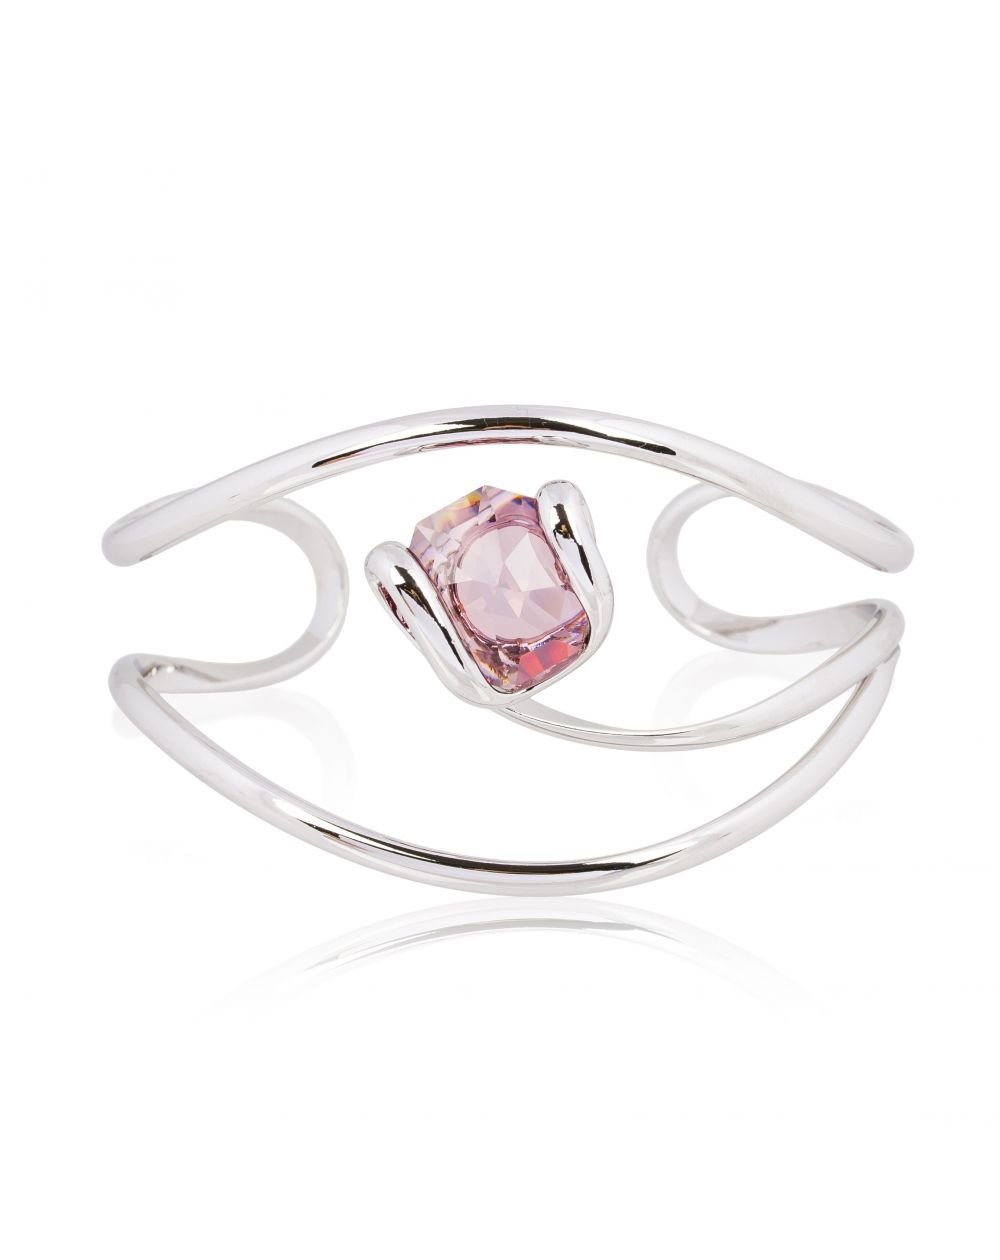 Andrea Marazzini bijoux - Bracelet cristal Swarovski Octagon Antique Pink BR6